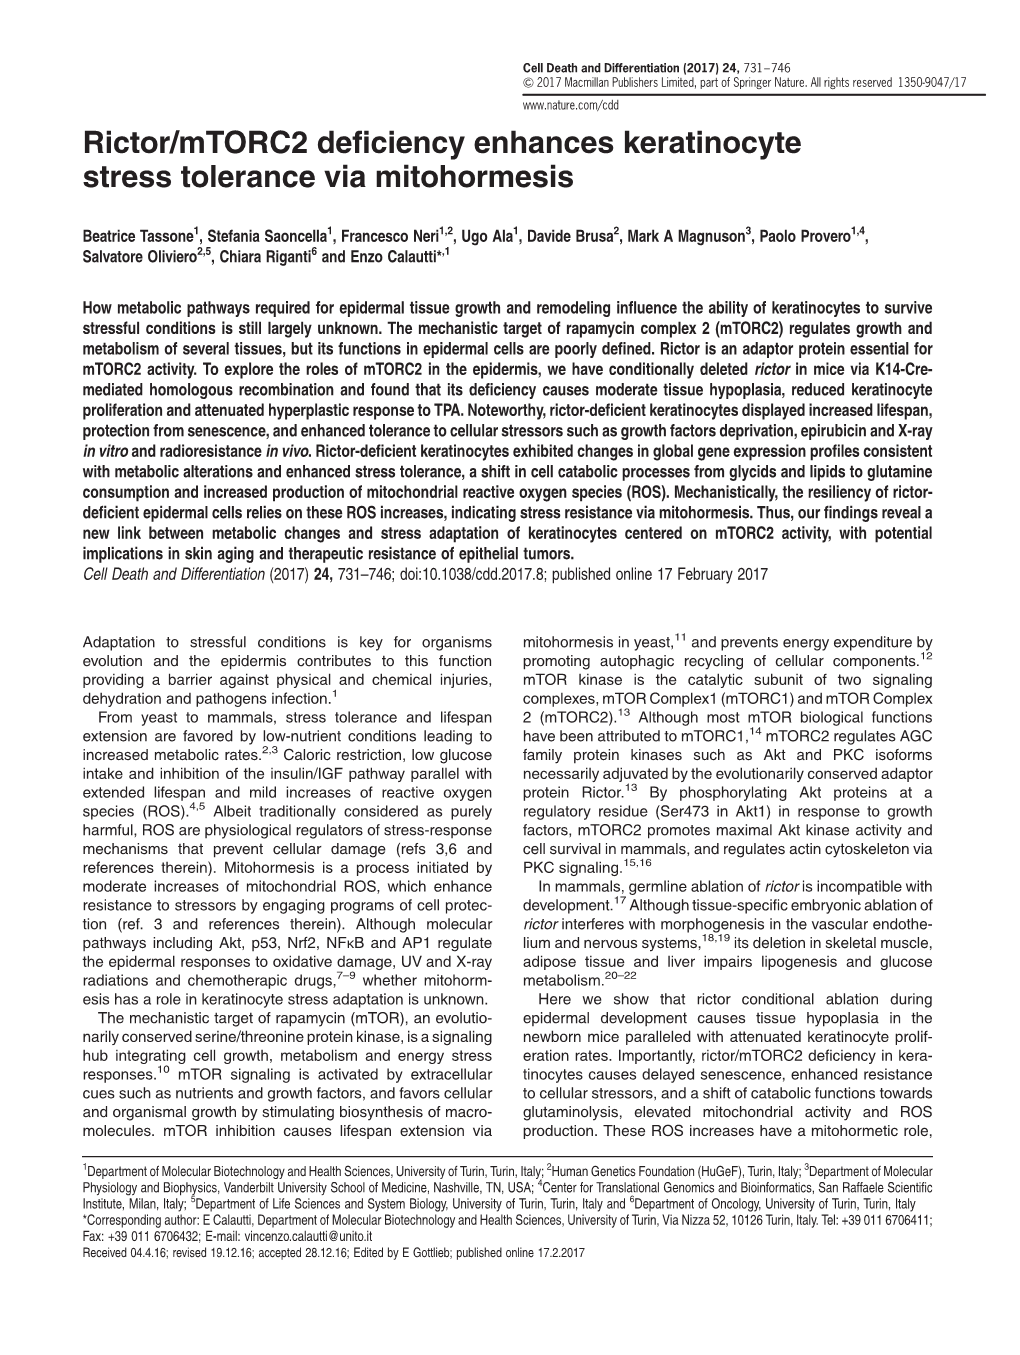 Mtorc2 Deficiency Enhances Keratinocyte Stress Tolerance Via Mitohormesis